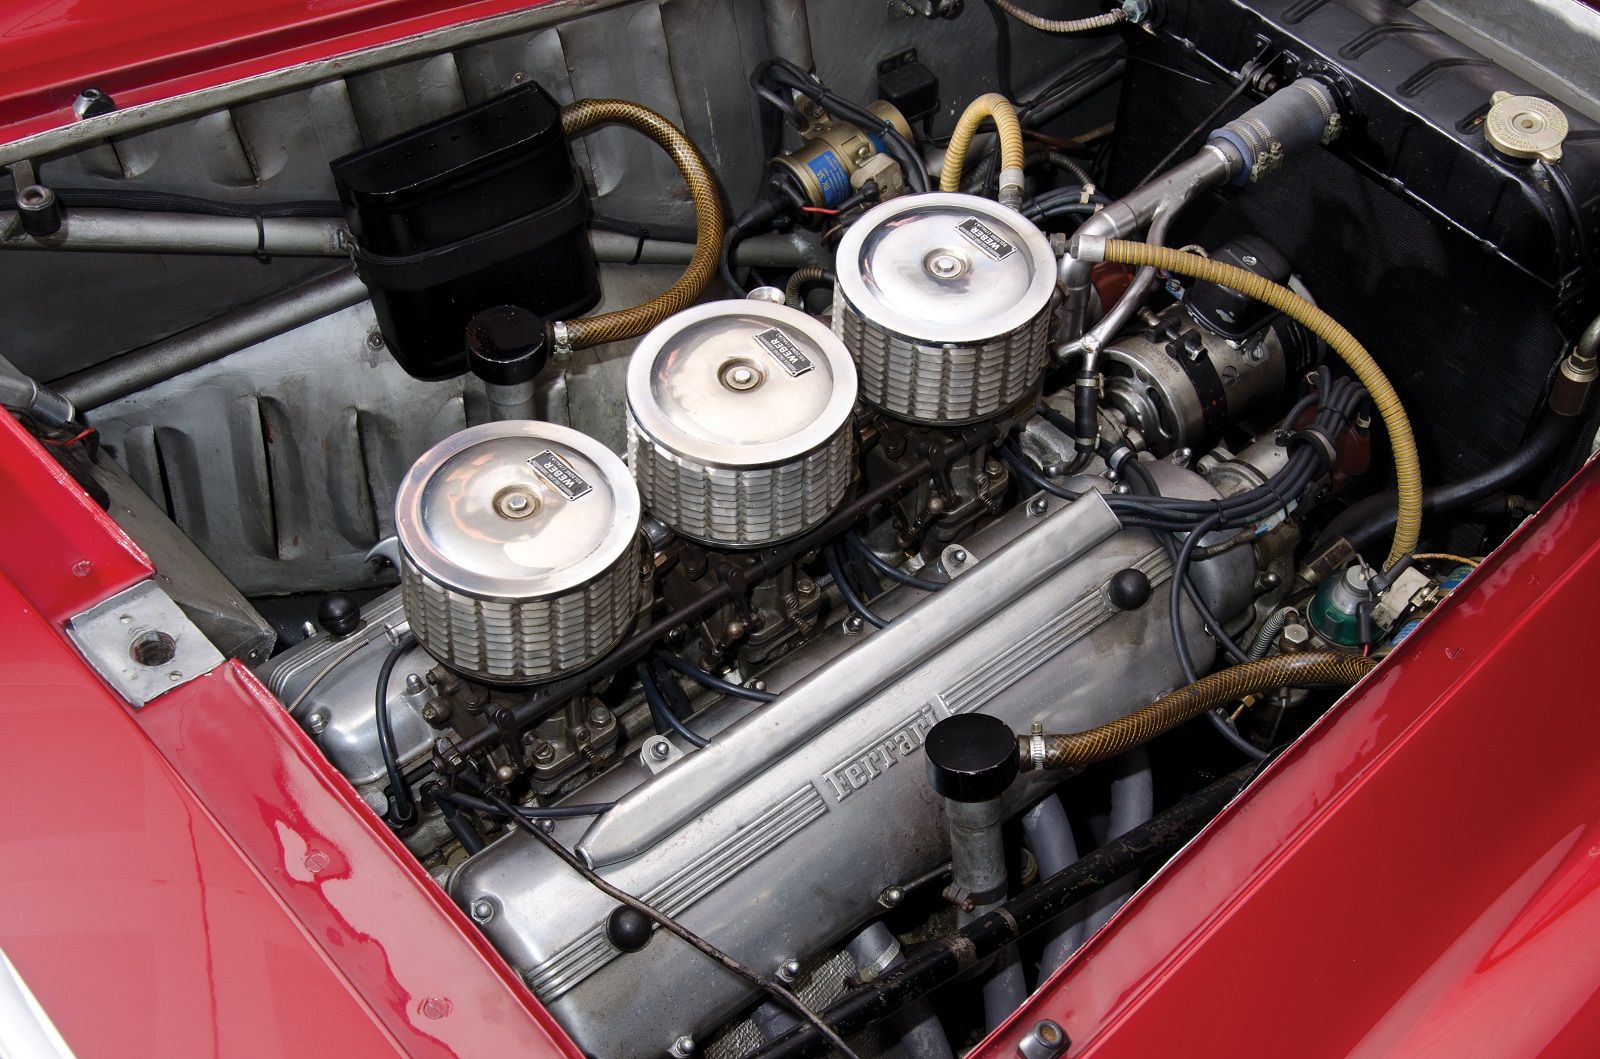  Ferrari 225 Sport Spyder ‘Tuboscocca’